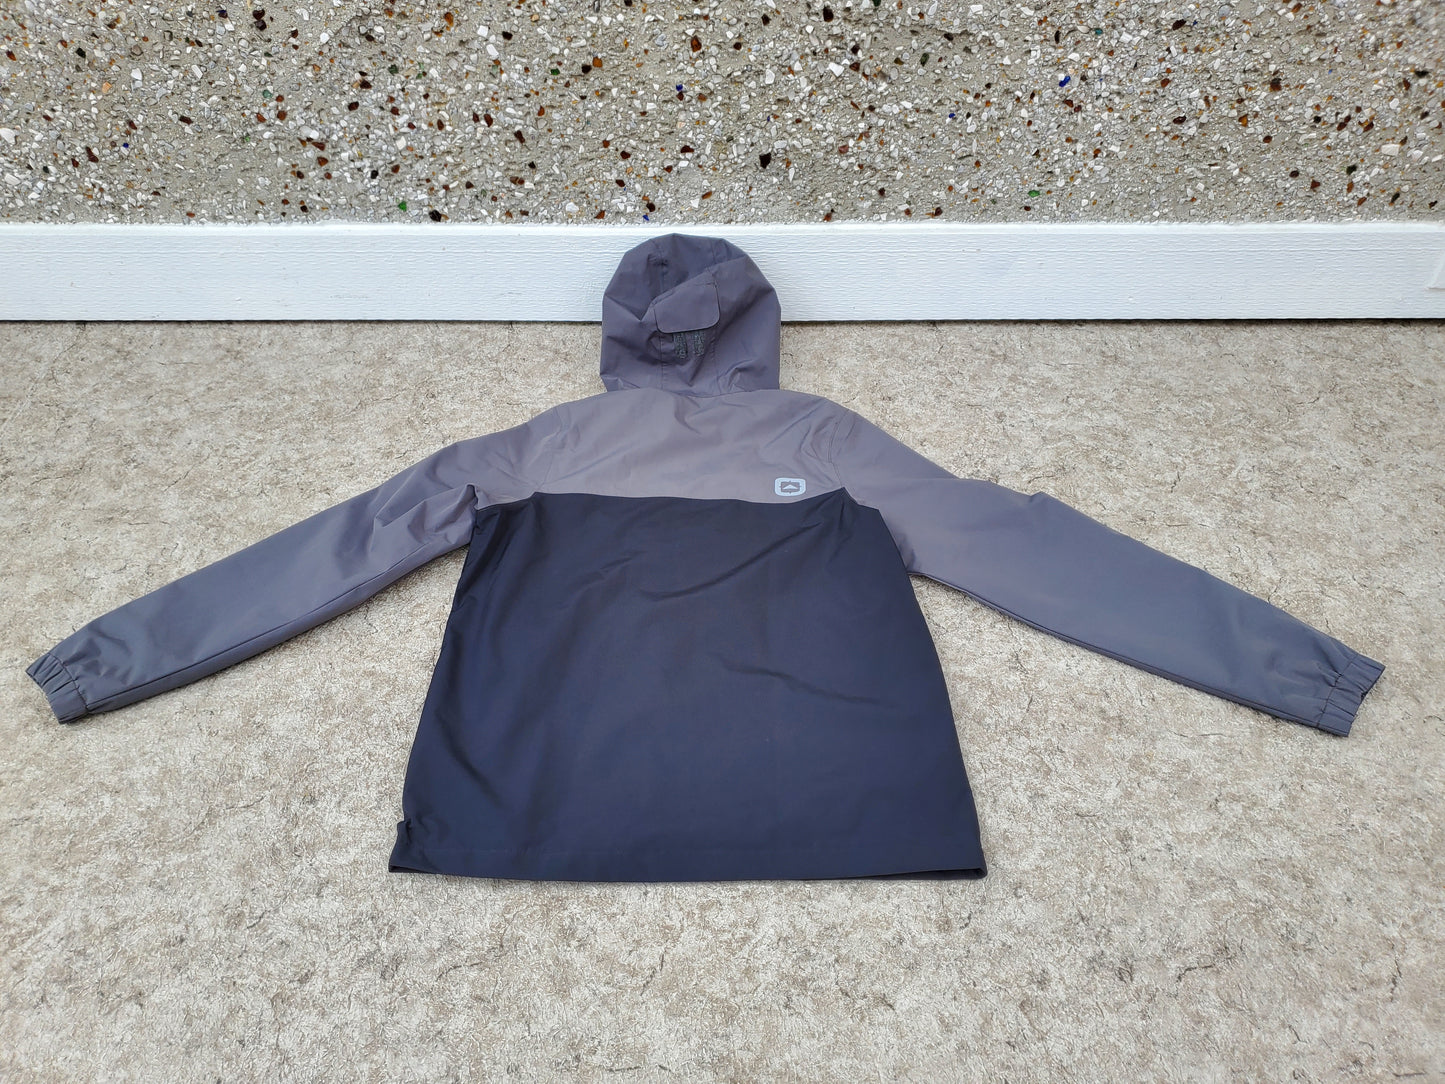 Rain Coat Child Size 14-16 Outbound Black Grey New Demo Model